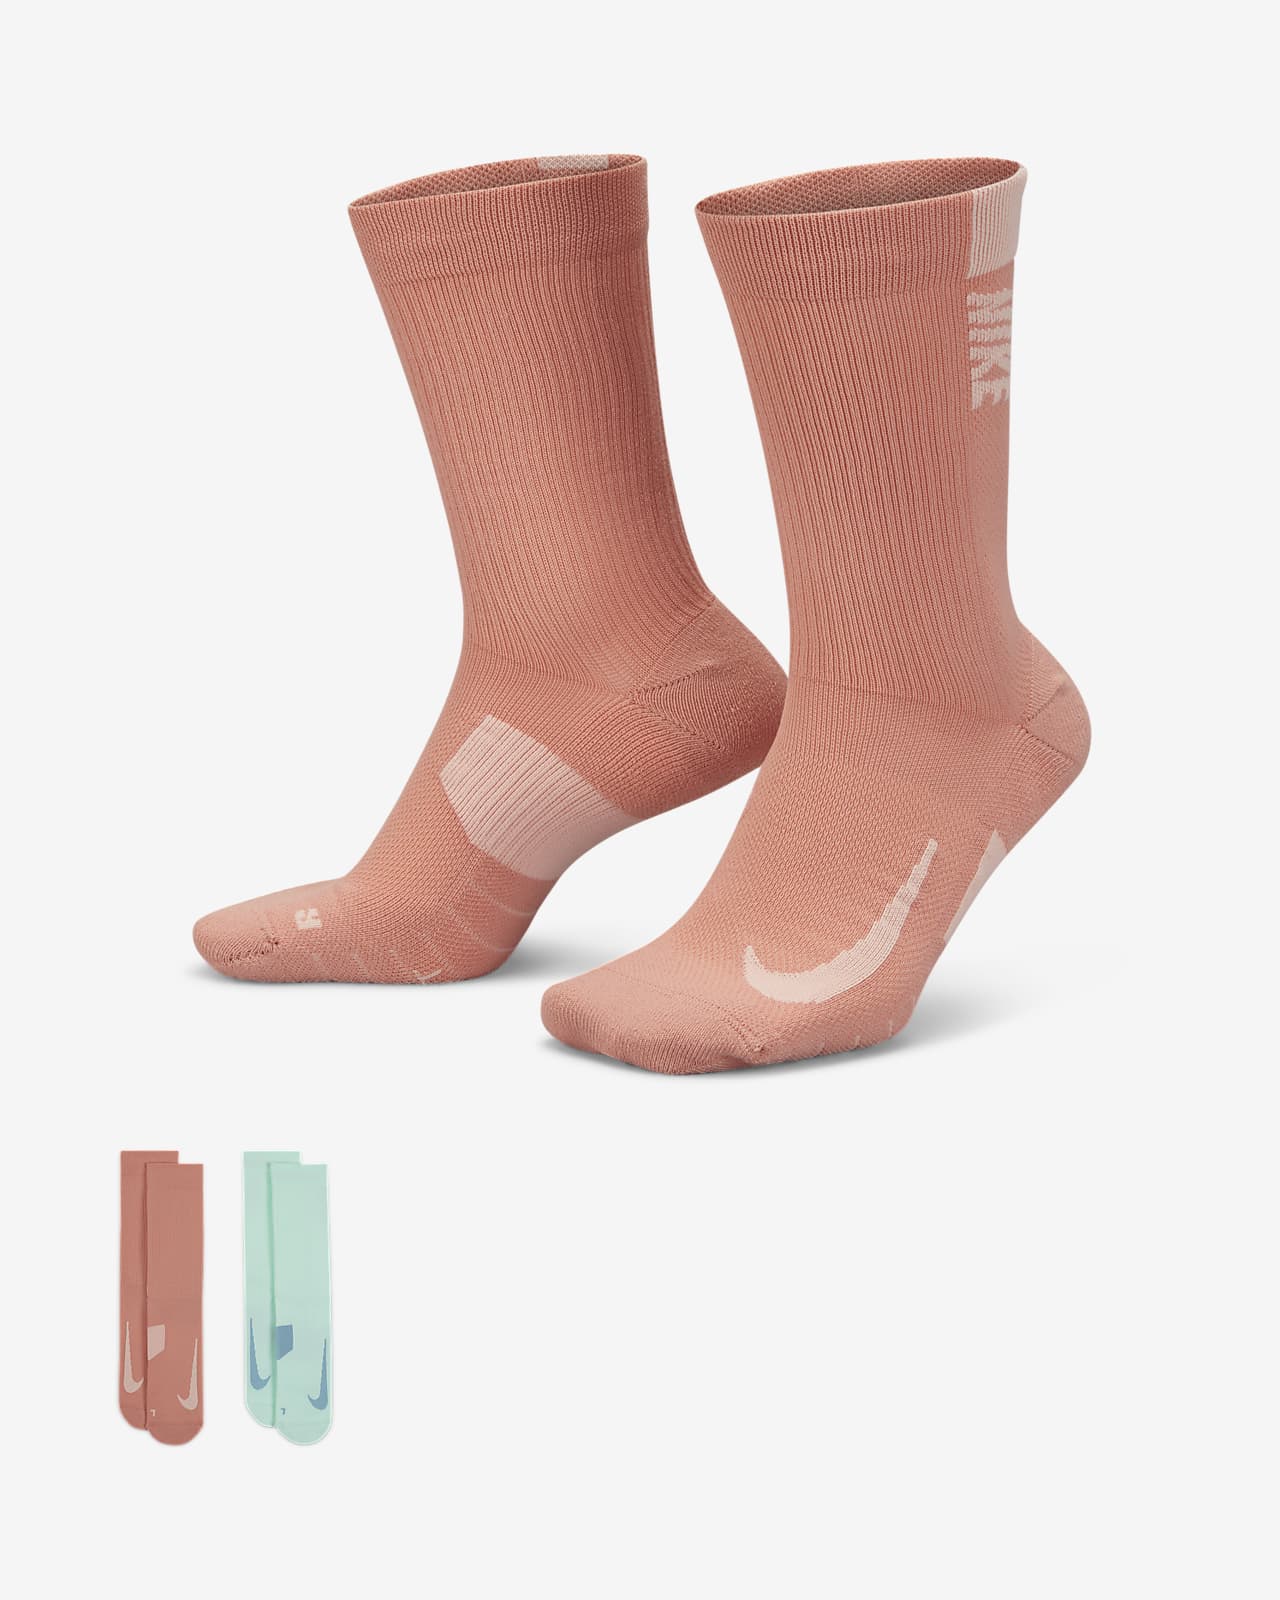 Nike Multiplier Crew Socks (2 Pairs)